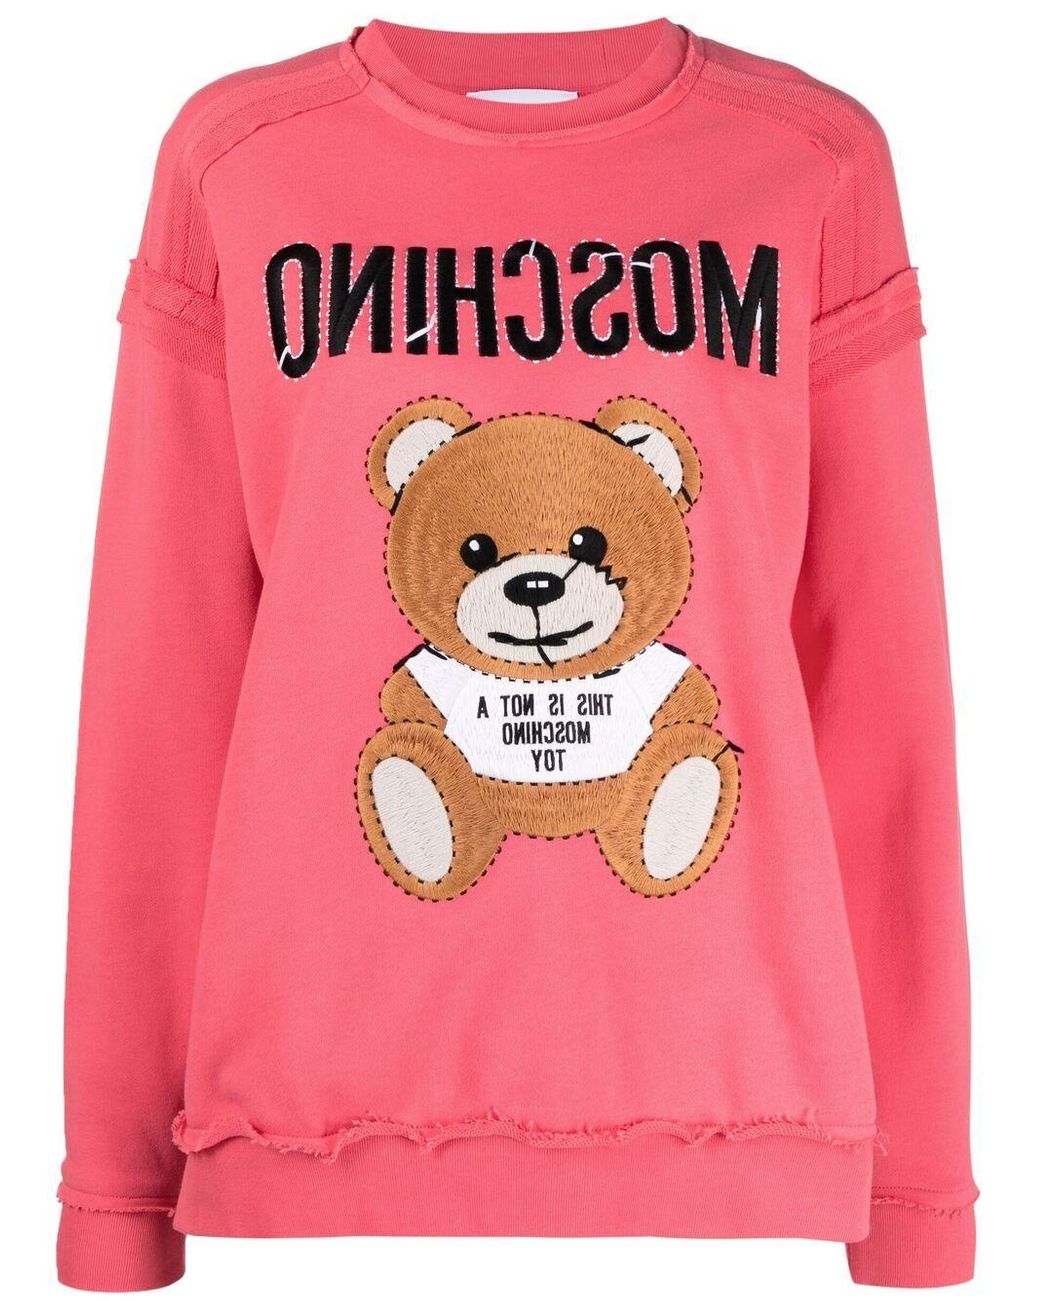 Moschino Cotton Teddy Bear Embroidered Sweatshirt in Pink - Lyst